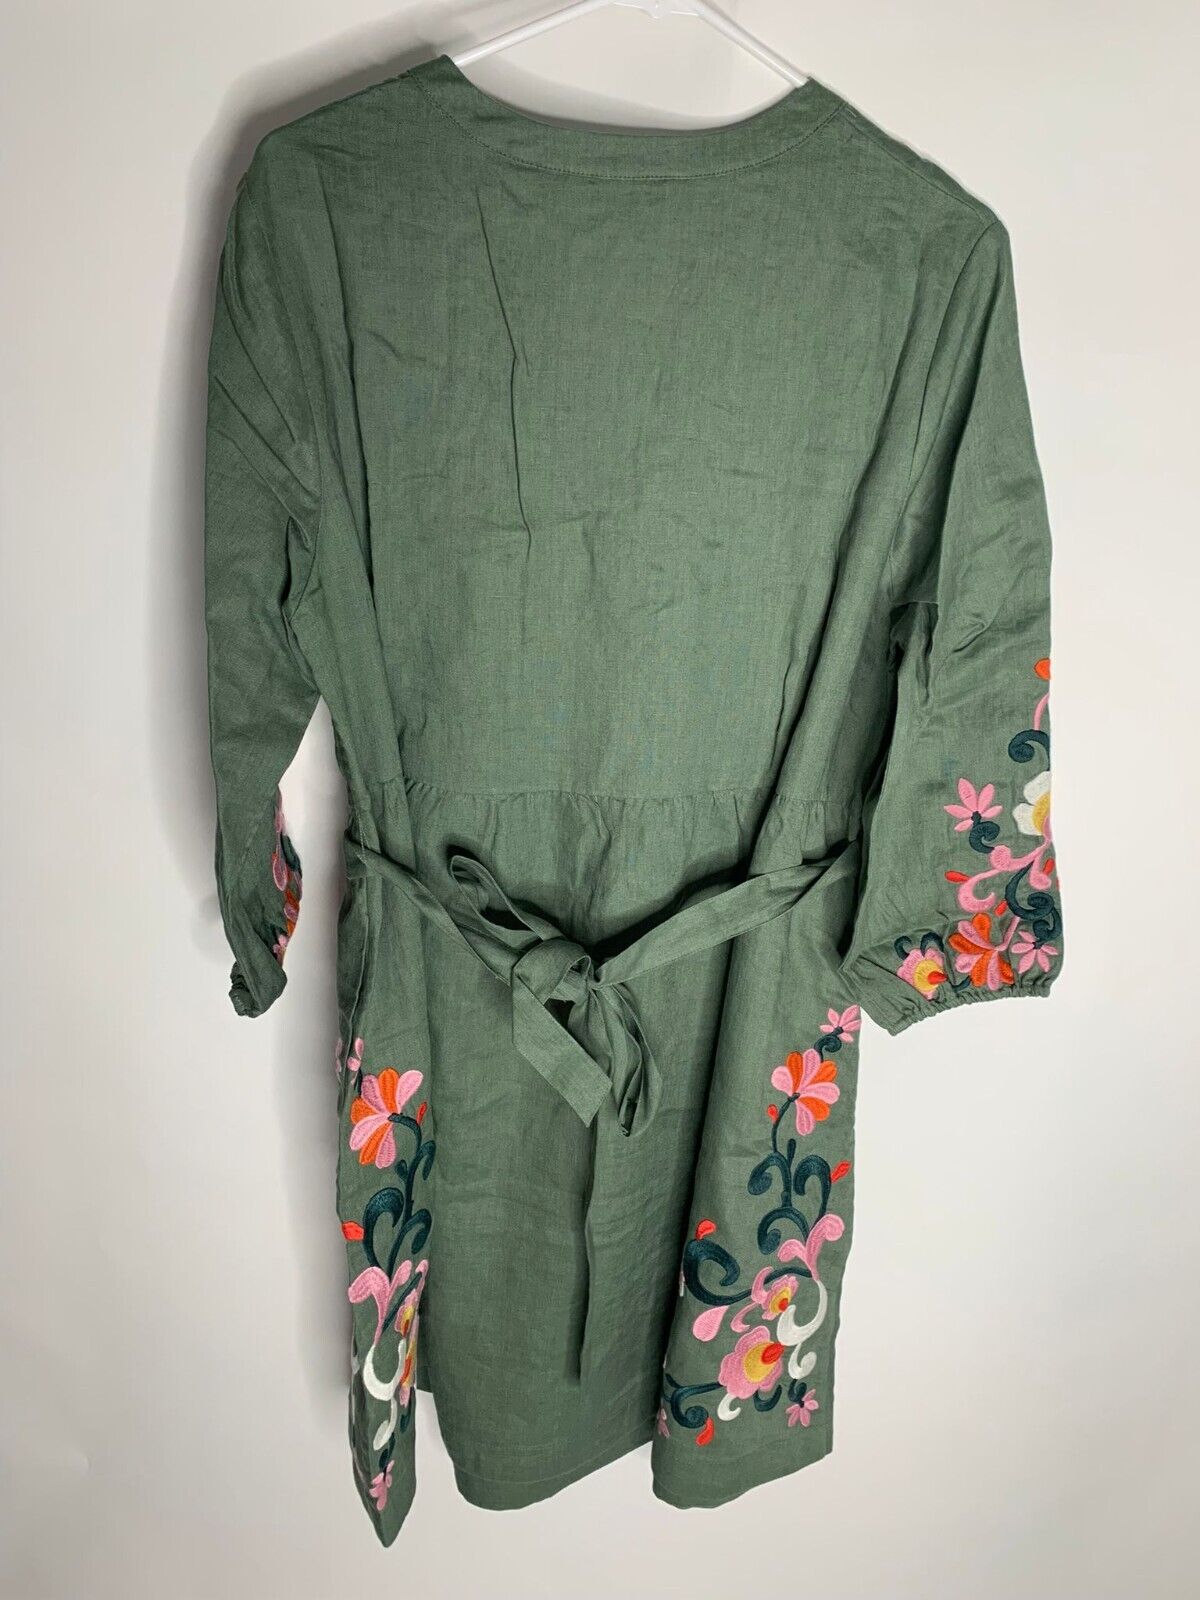 Boden Womens 4 Alder Green Embroidered Linen Dress Belted Split V Neck Boho